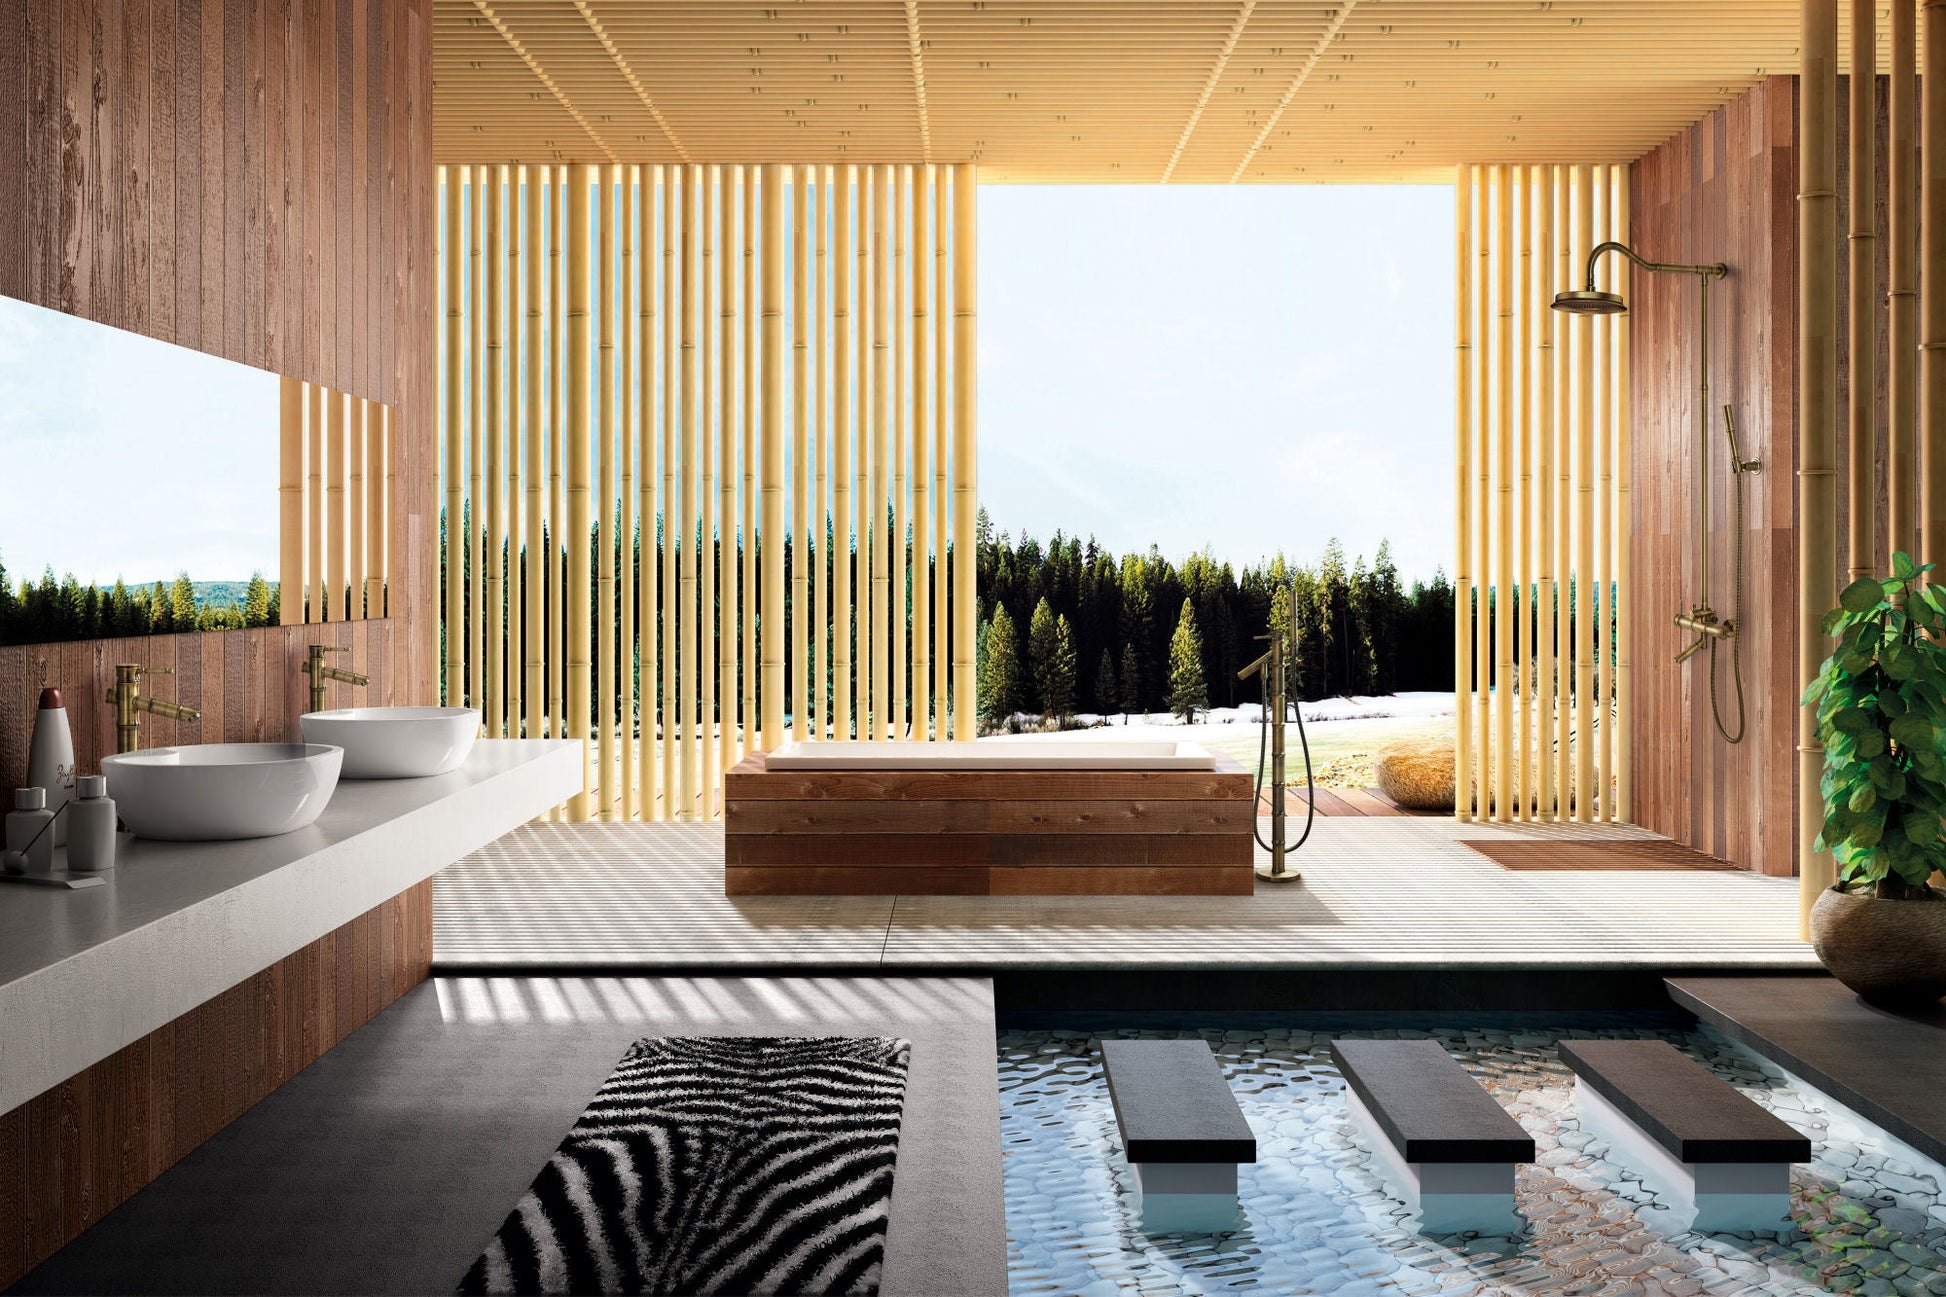 Bamboo Bronze Design Simple Rack Towel Holder - |VESIMI Design| Luxury and Rustic bathrooms online